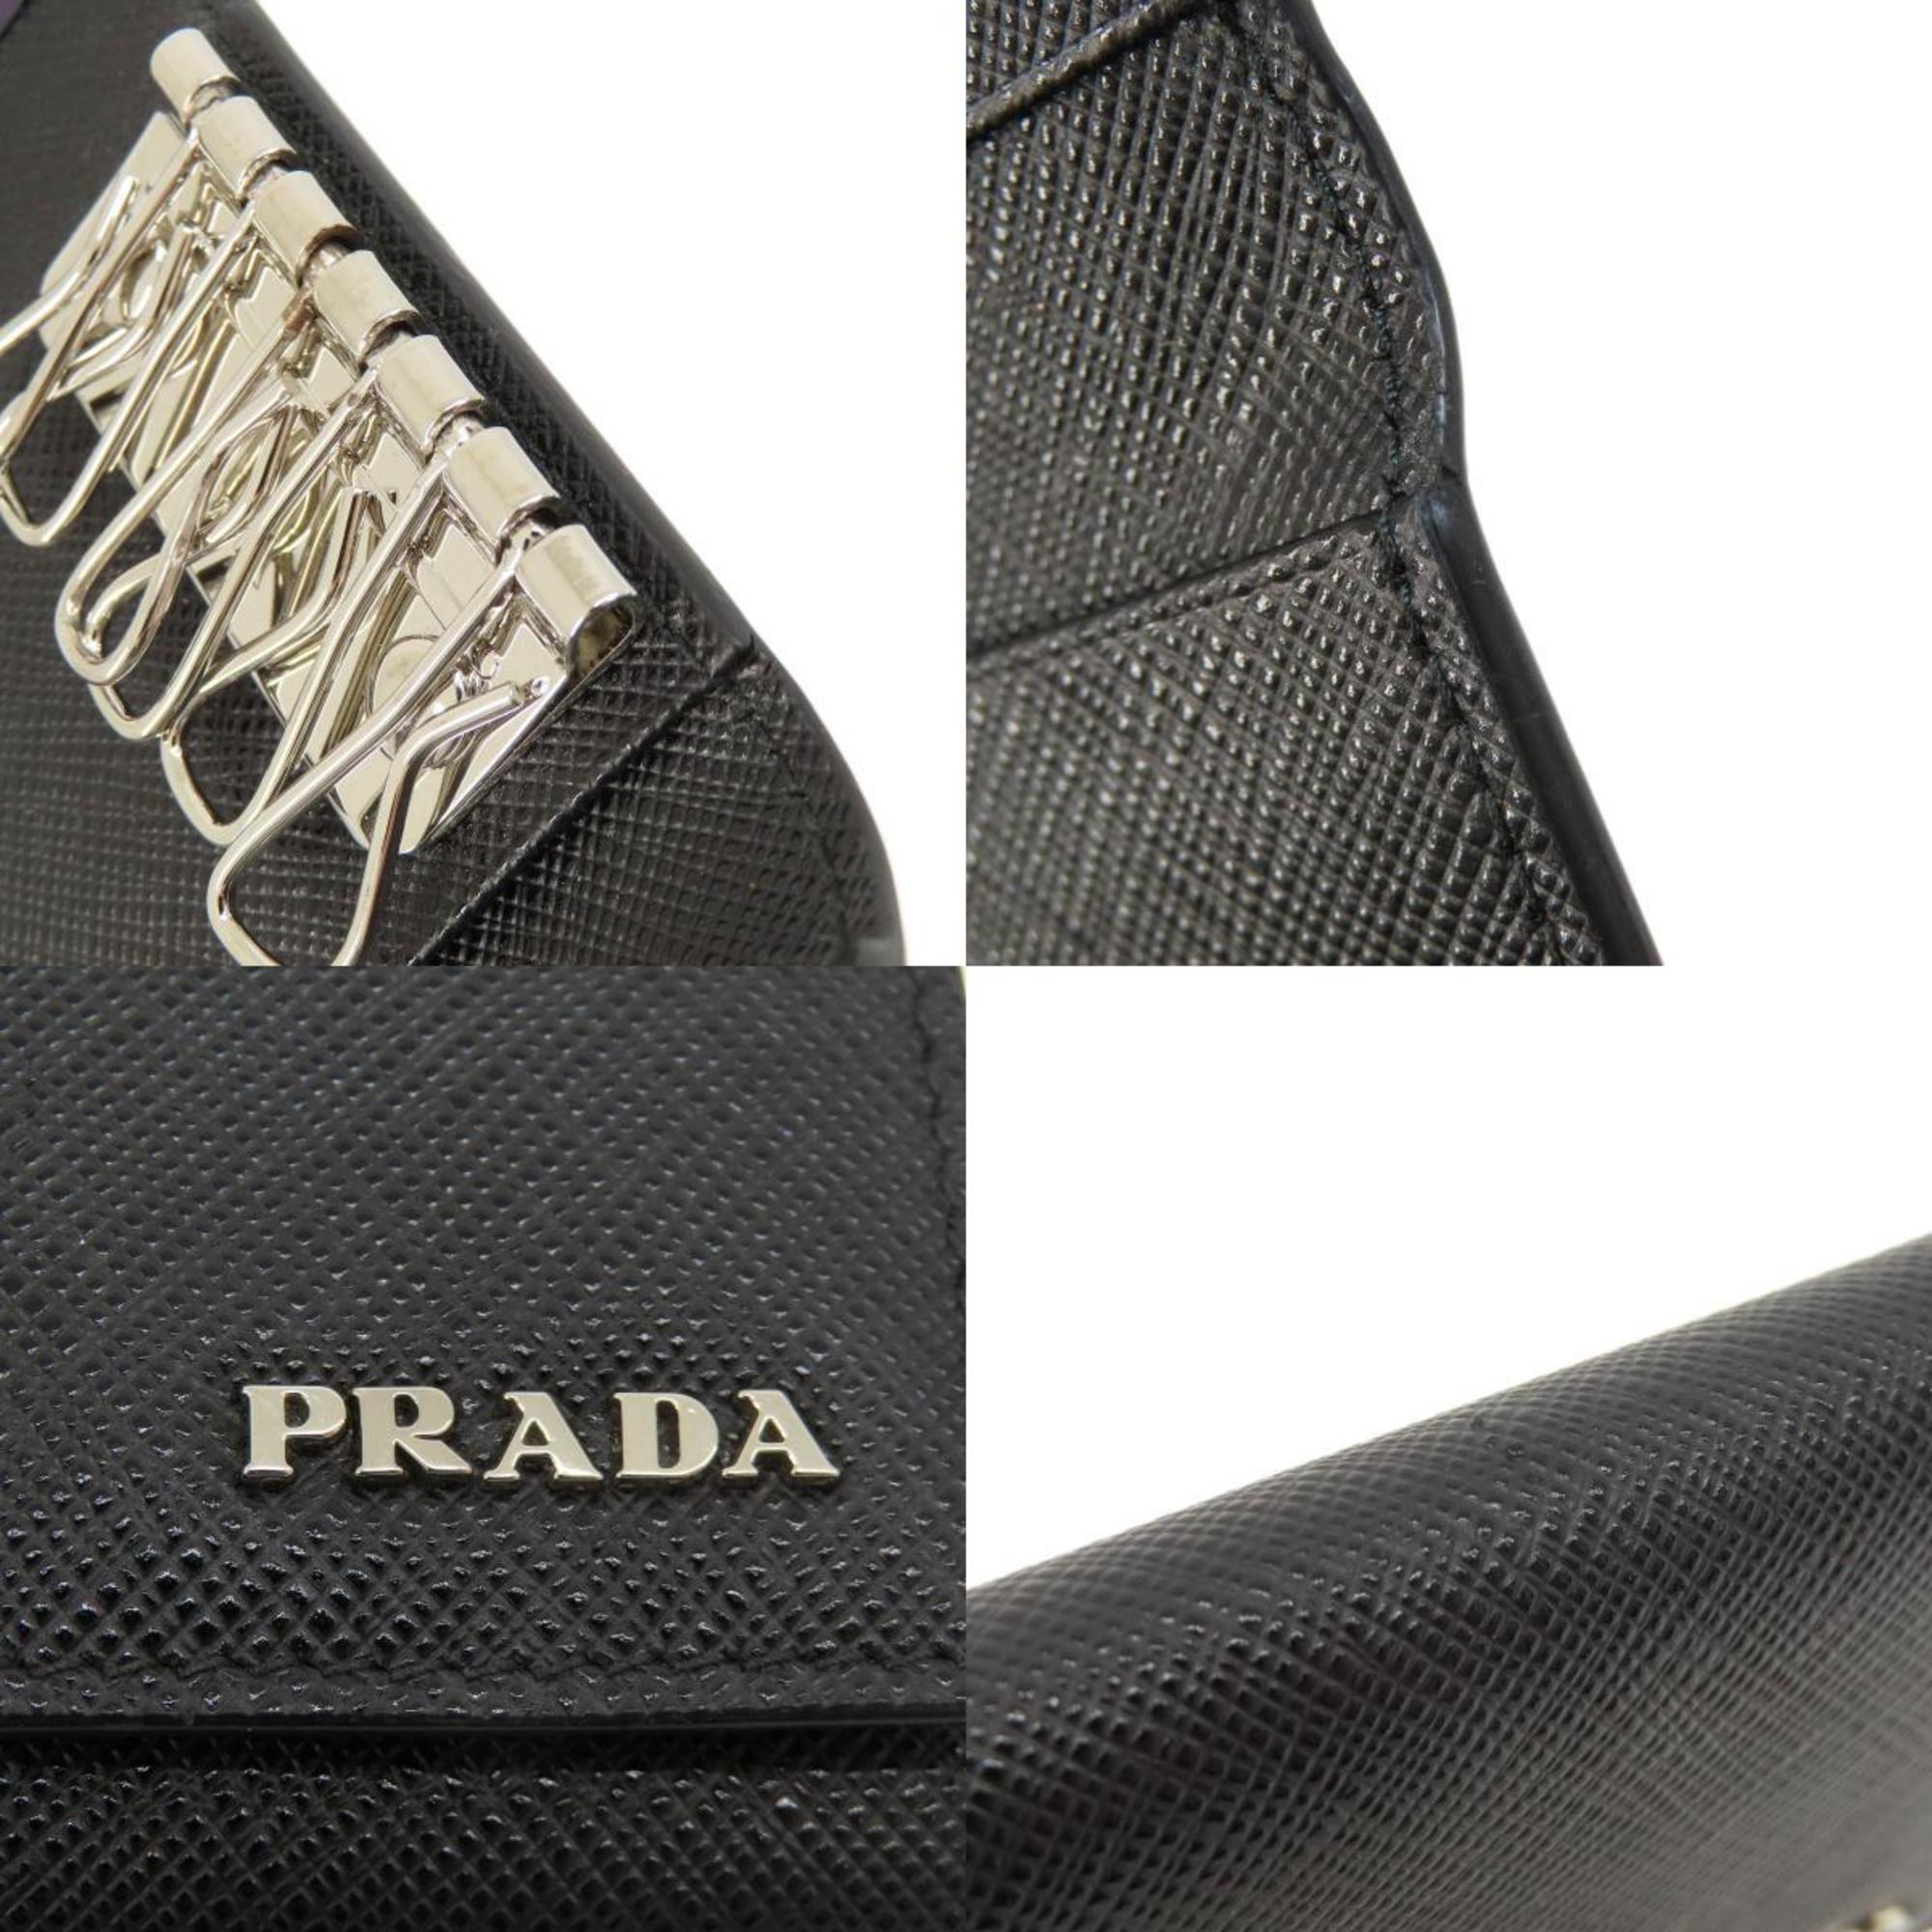 Prada Saffiano metal key case leather women's PRADA